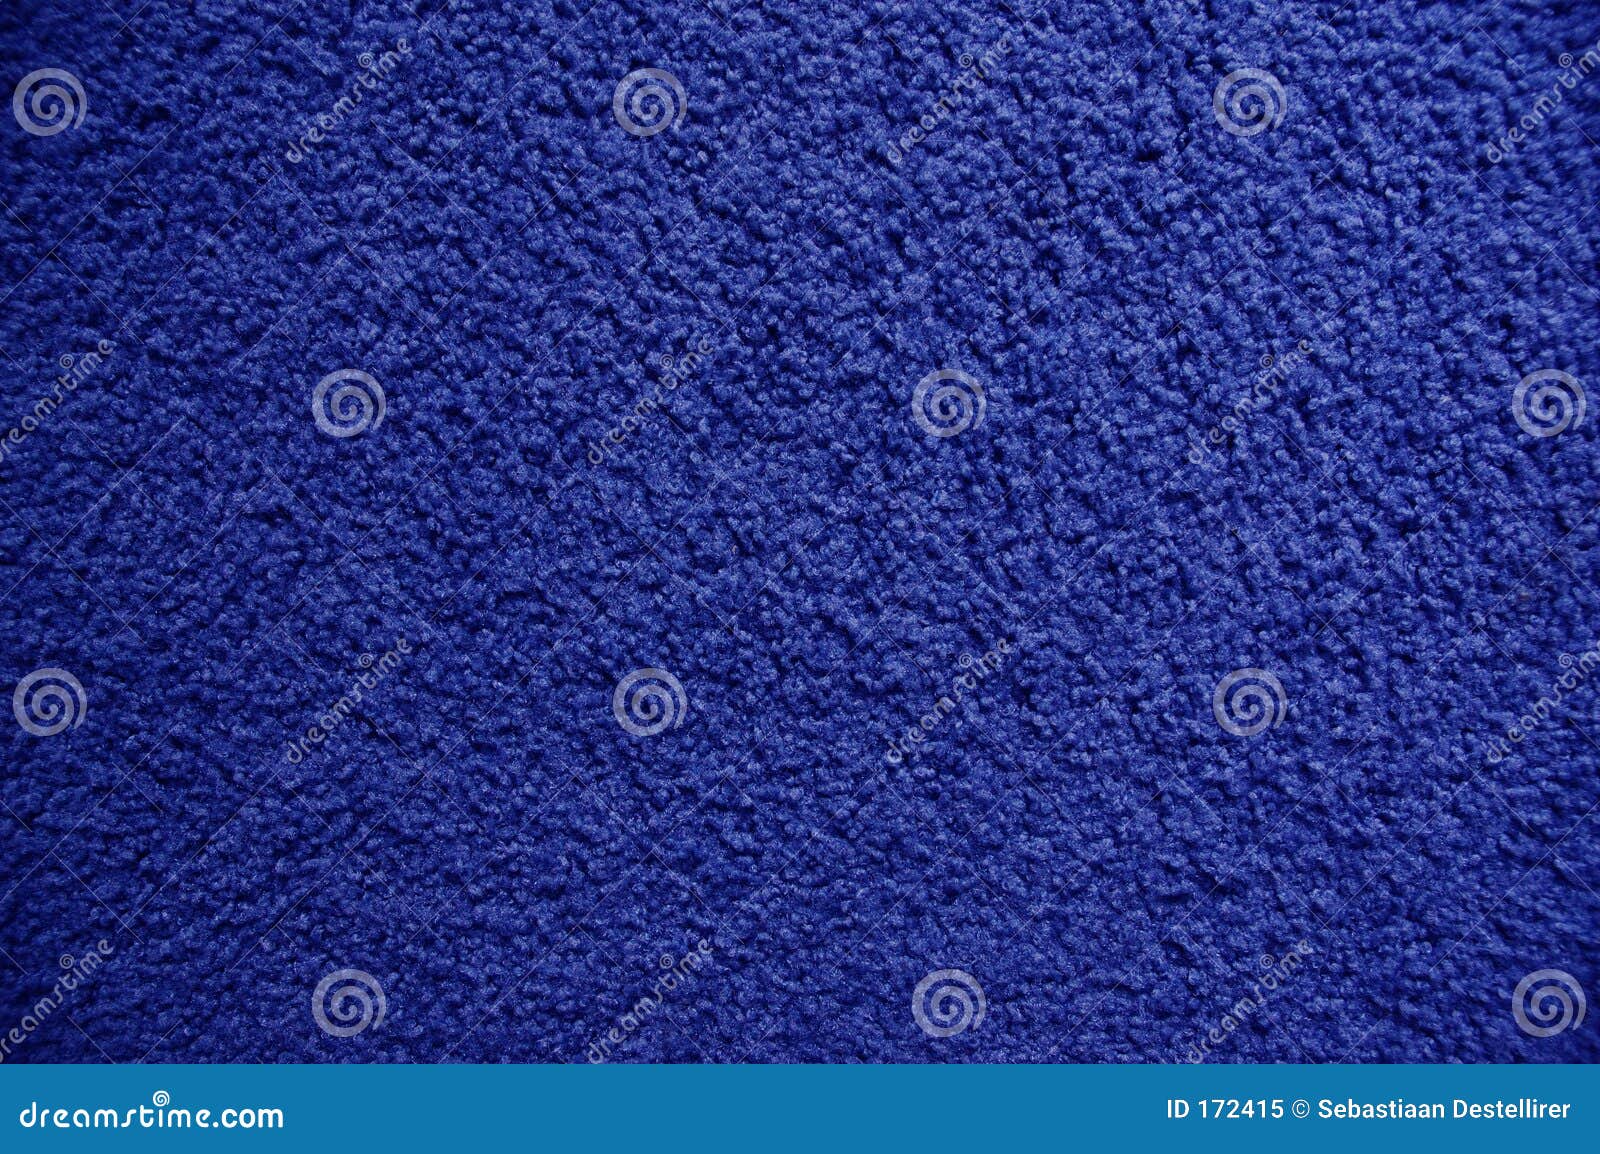 Carpet_DarkBlue stock image. Image of structures, carpet - 172415